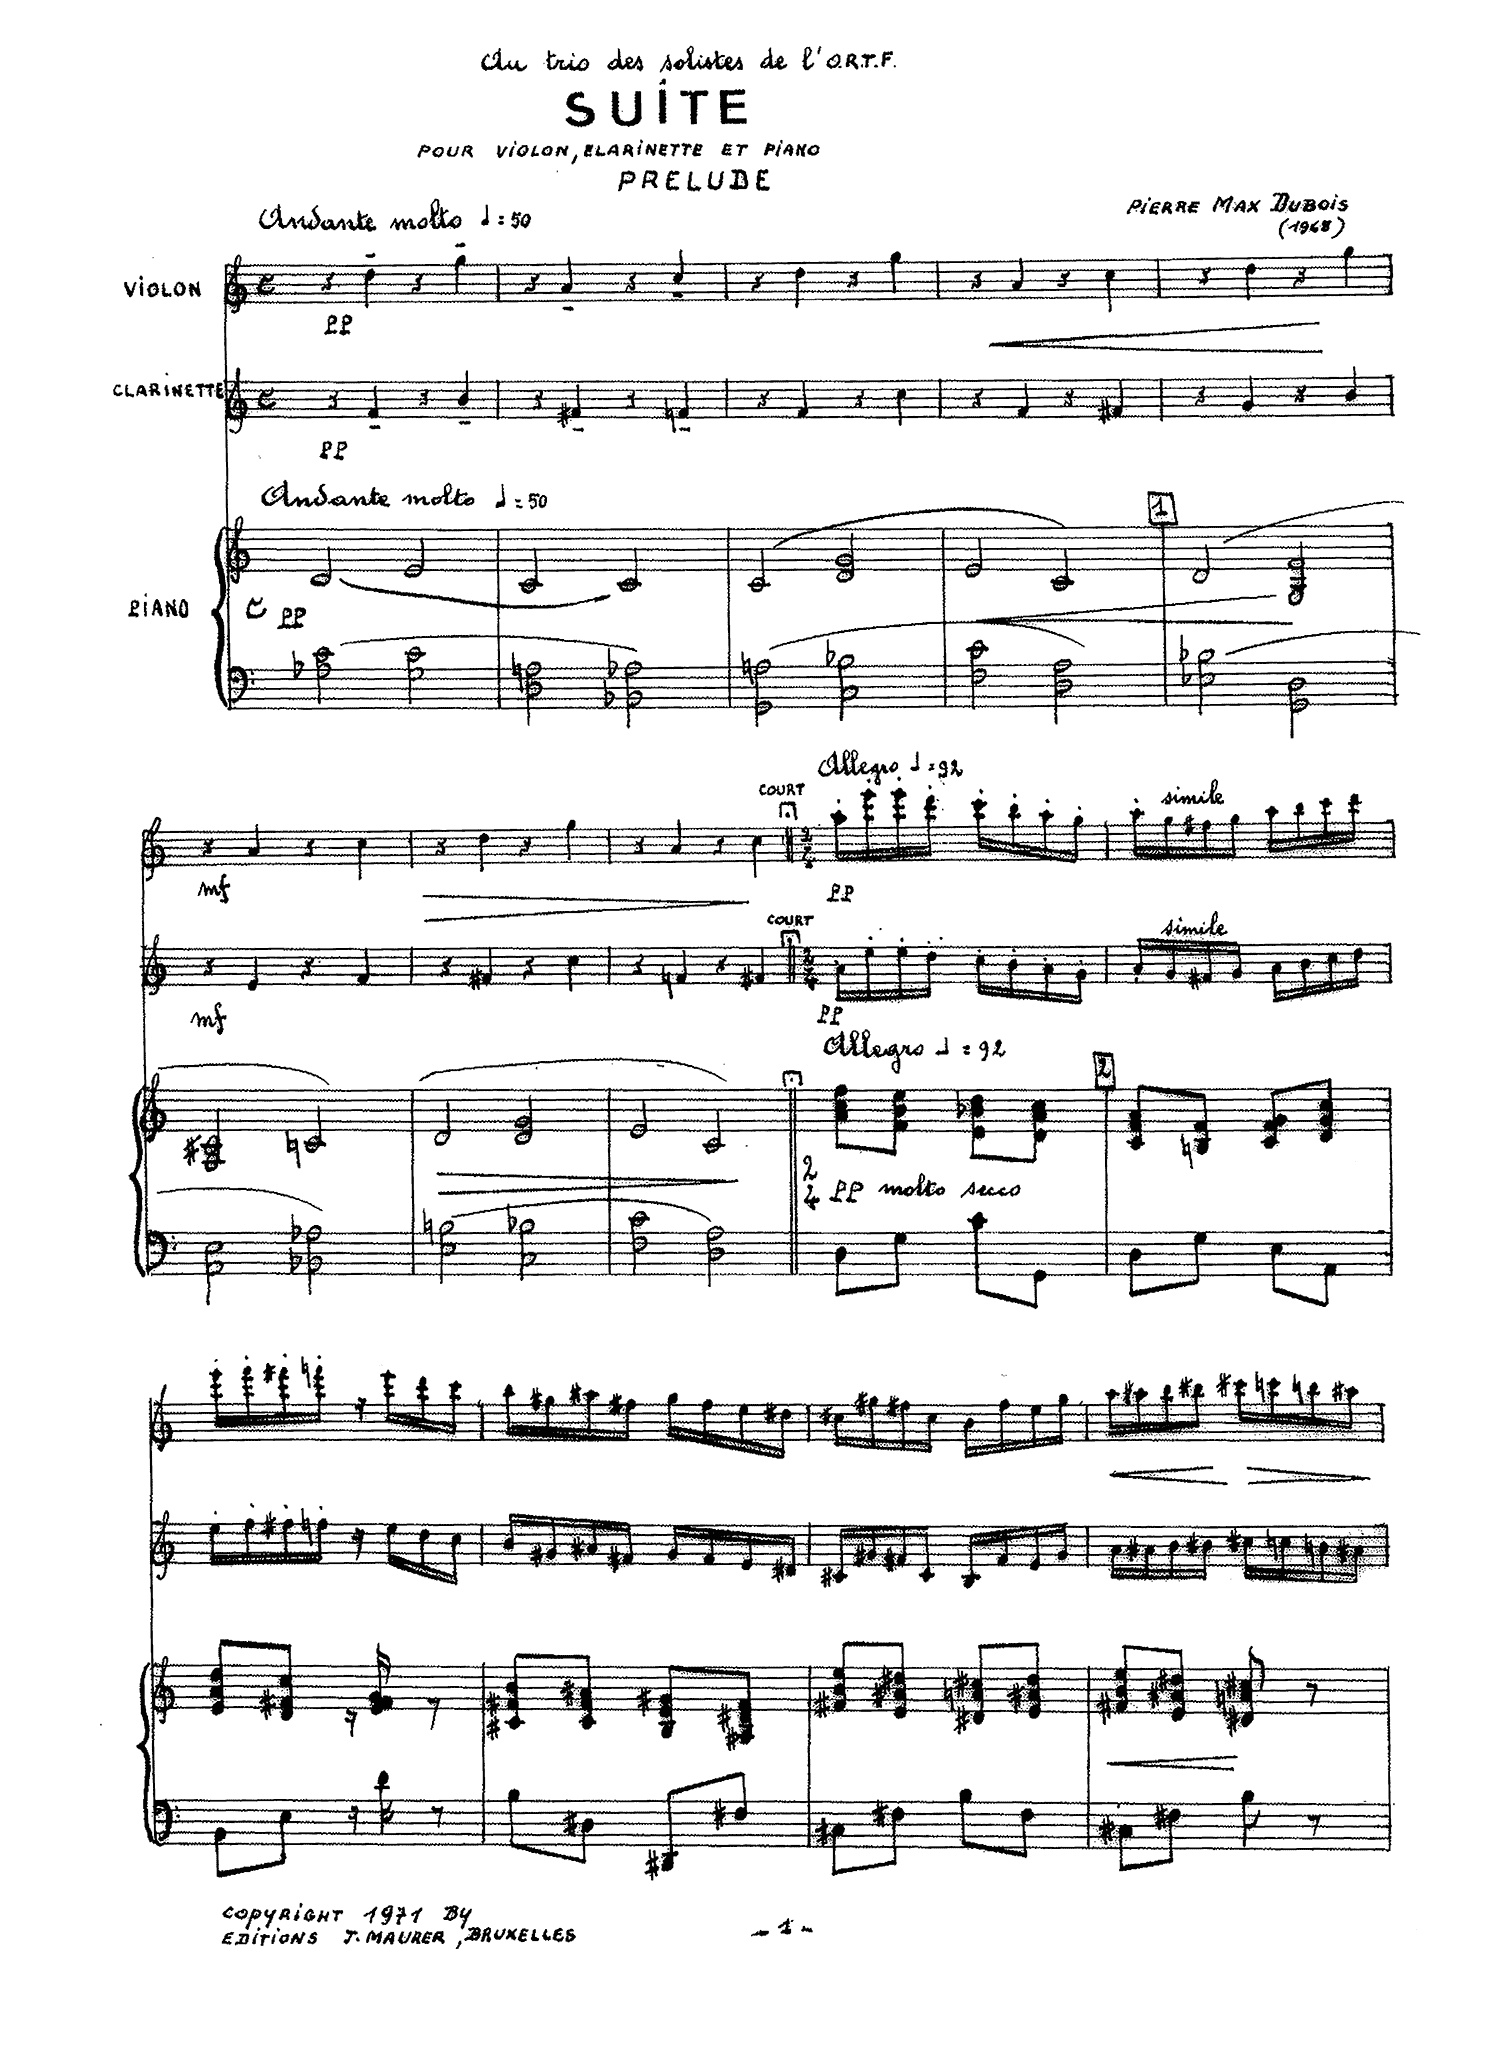 Pierre Max Dubois Suite for clarinet, violin, & piano - Movement 1